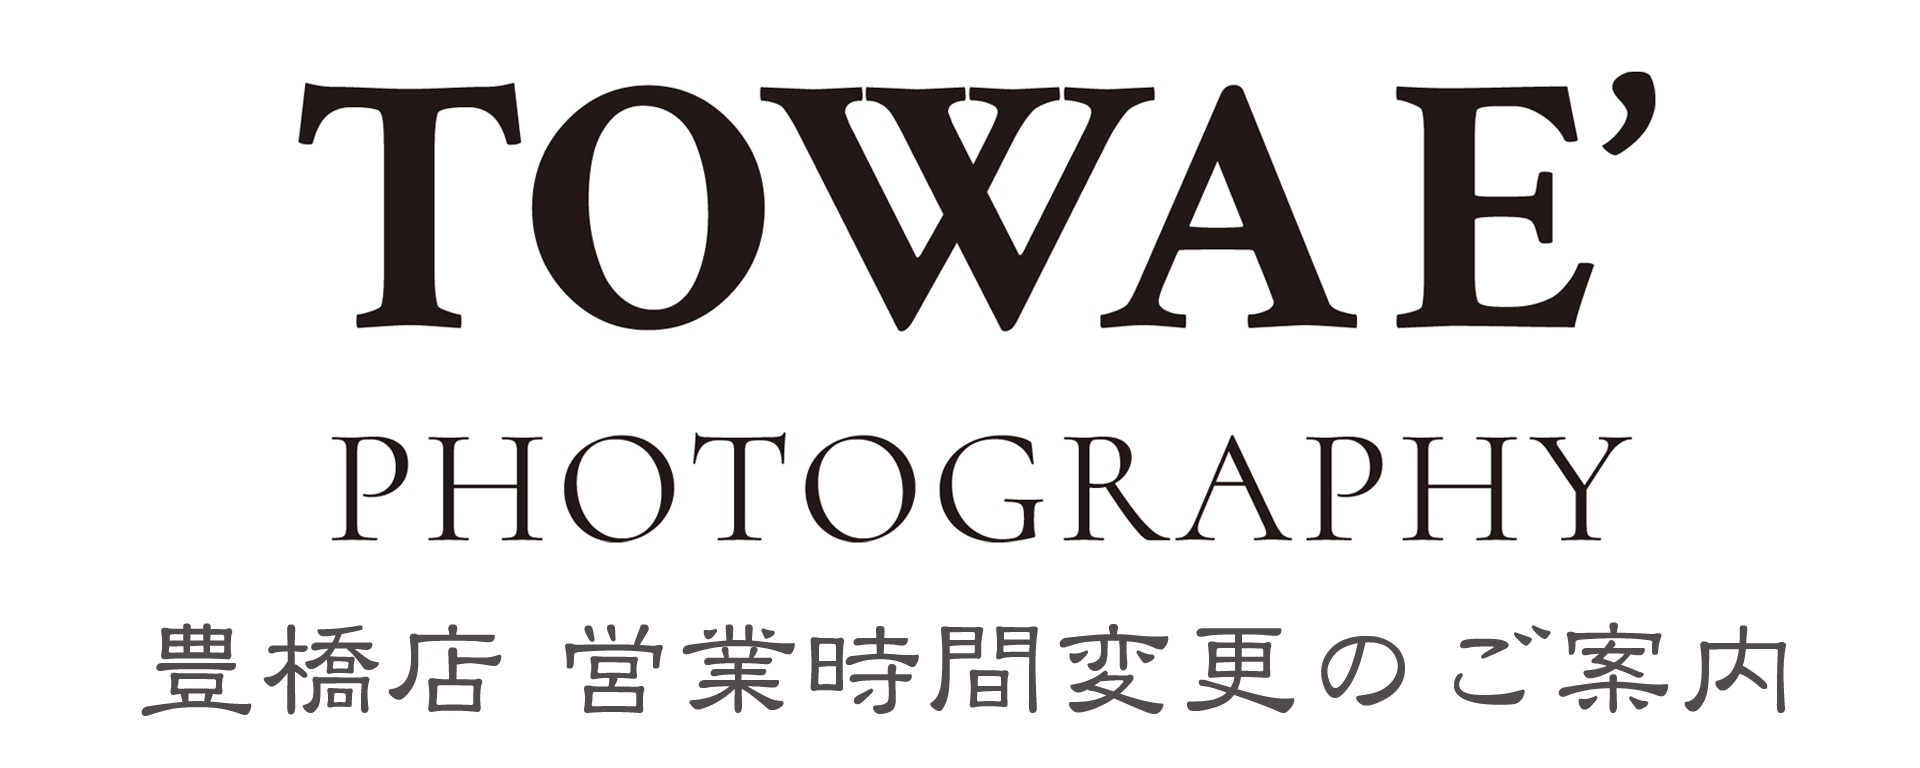 TOWAE’豊橋店 営業時間変更のお知らせ